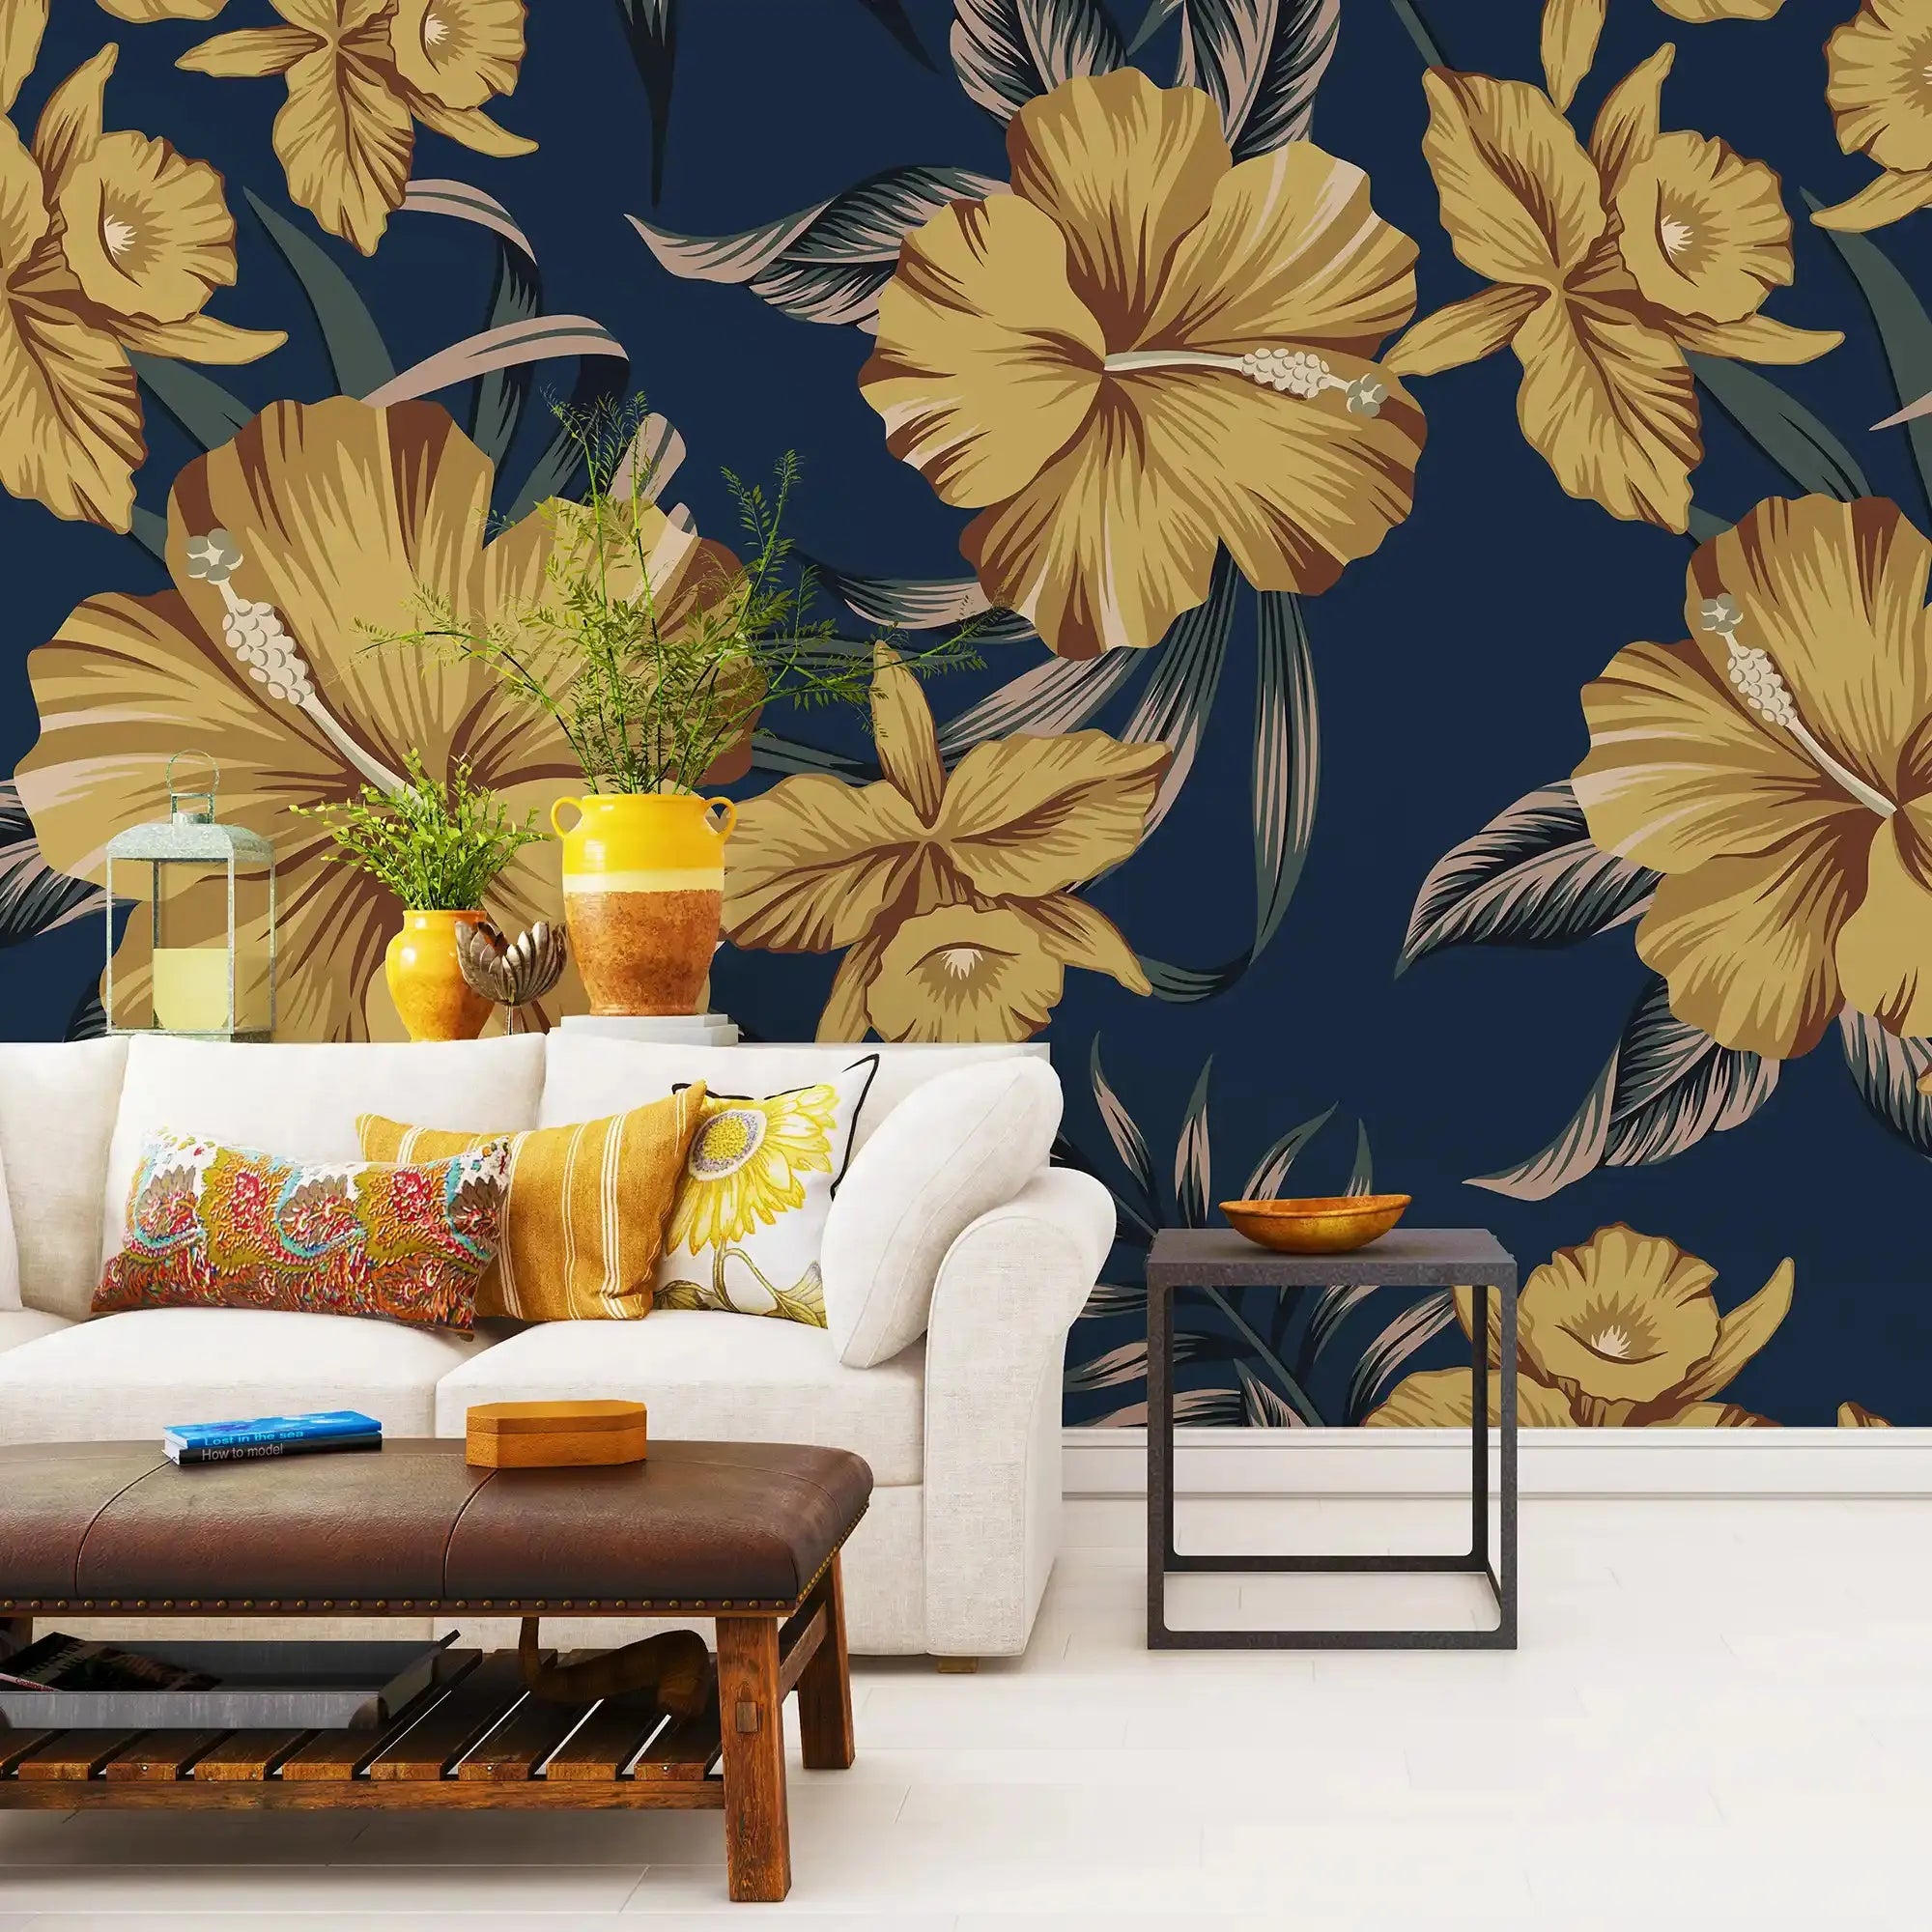 3102-A / Botanical Hibiscus Peel and Stick Wallpaper - Vibrant Yellow on Ocean Blue - DIY Wall Decor - Artevella